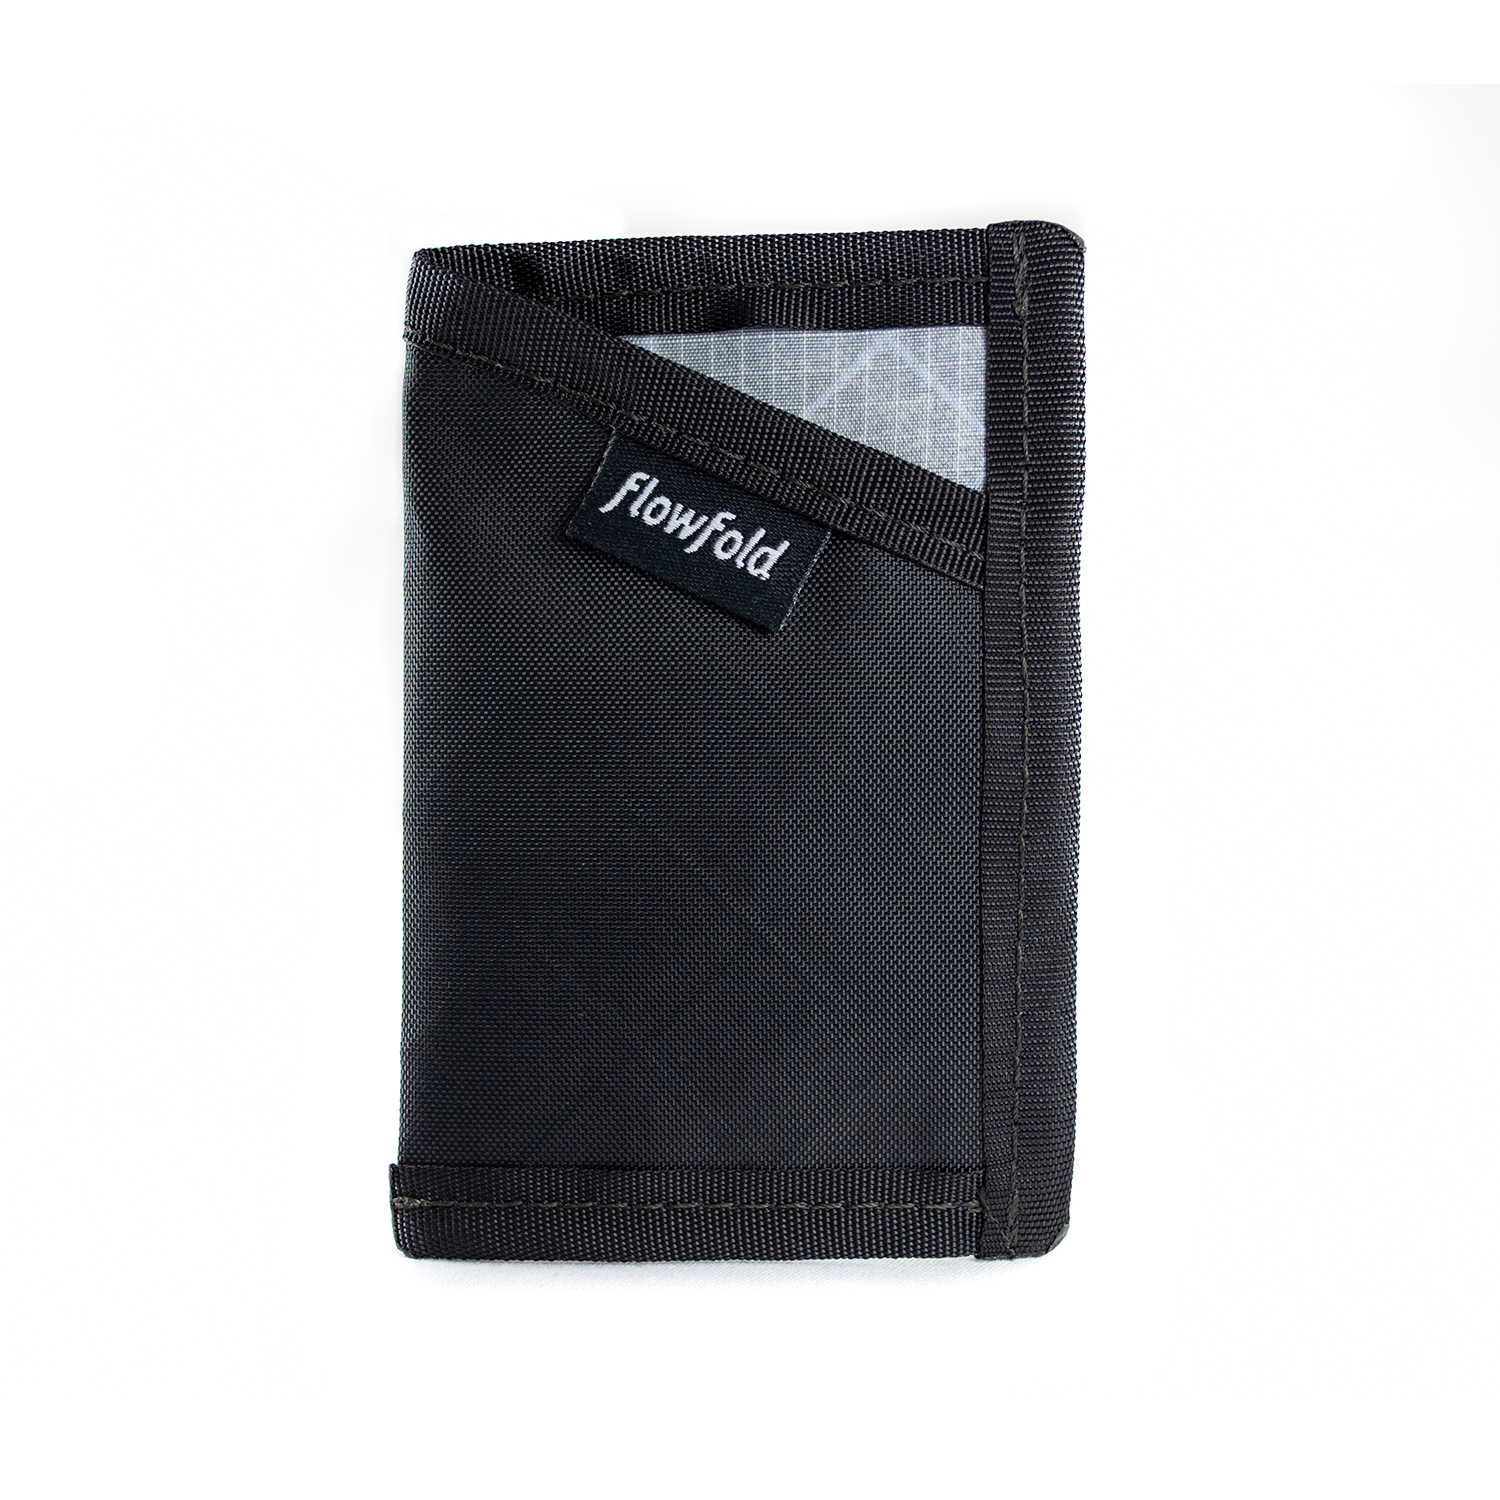 Flowfold Creator Zipper Pouch Phone Wallet